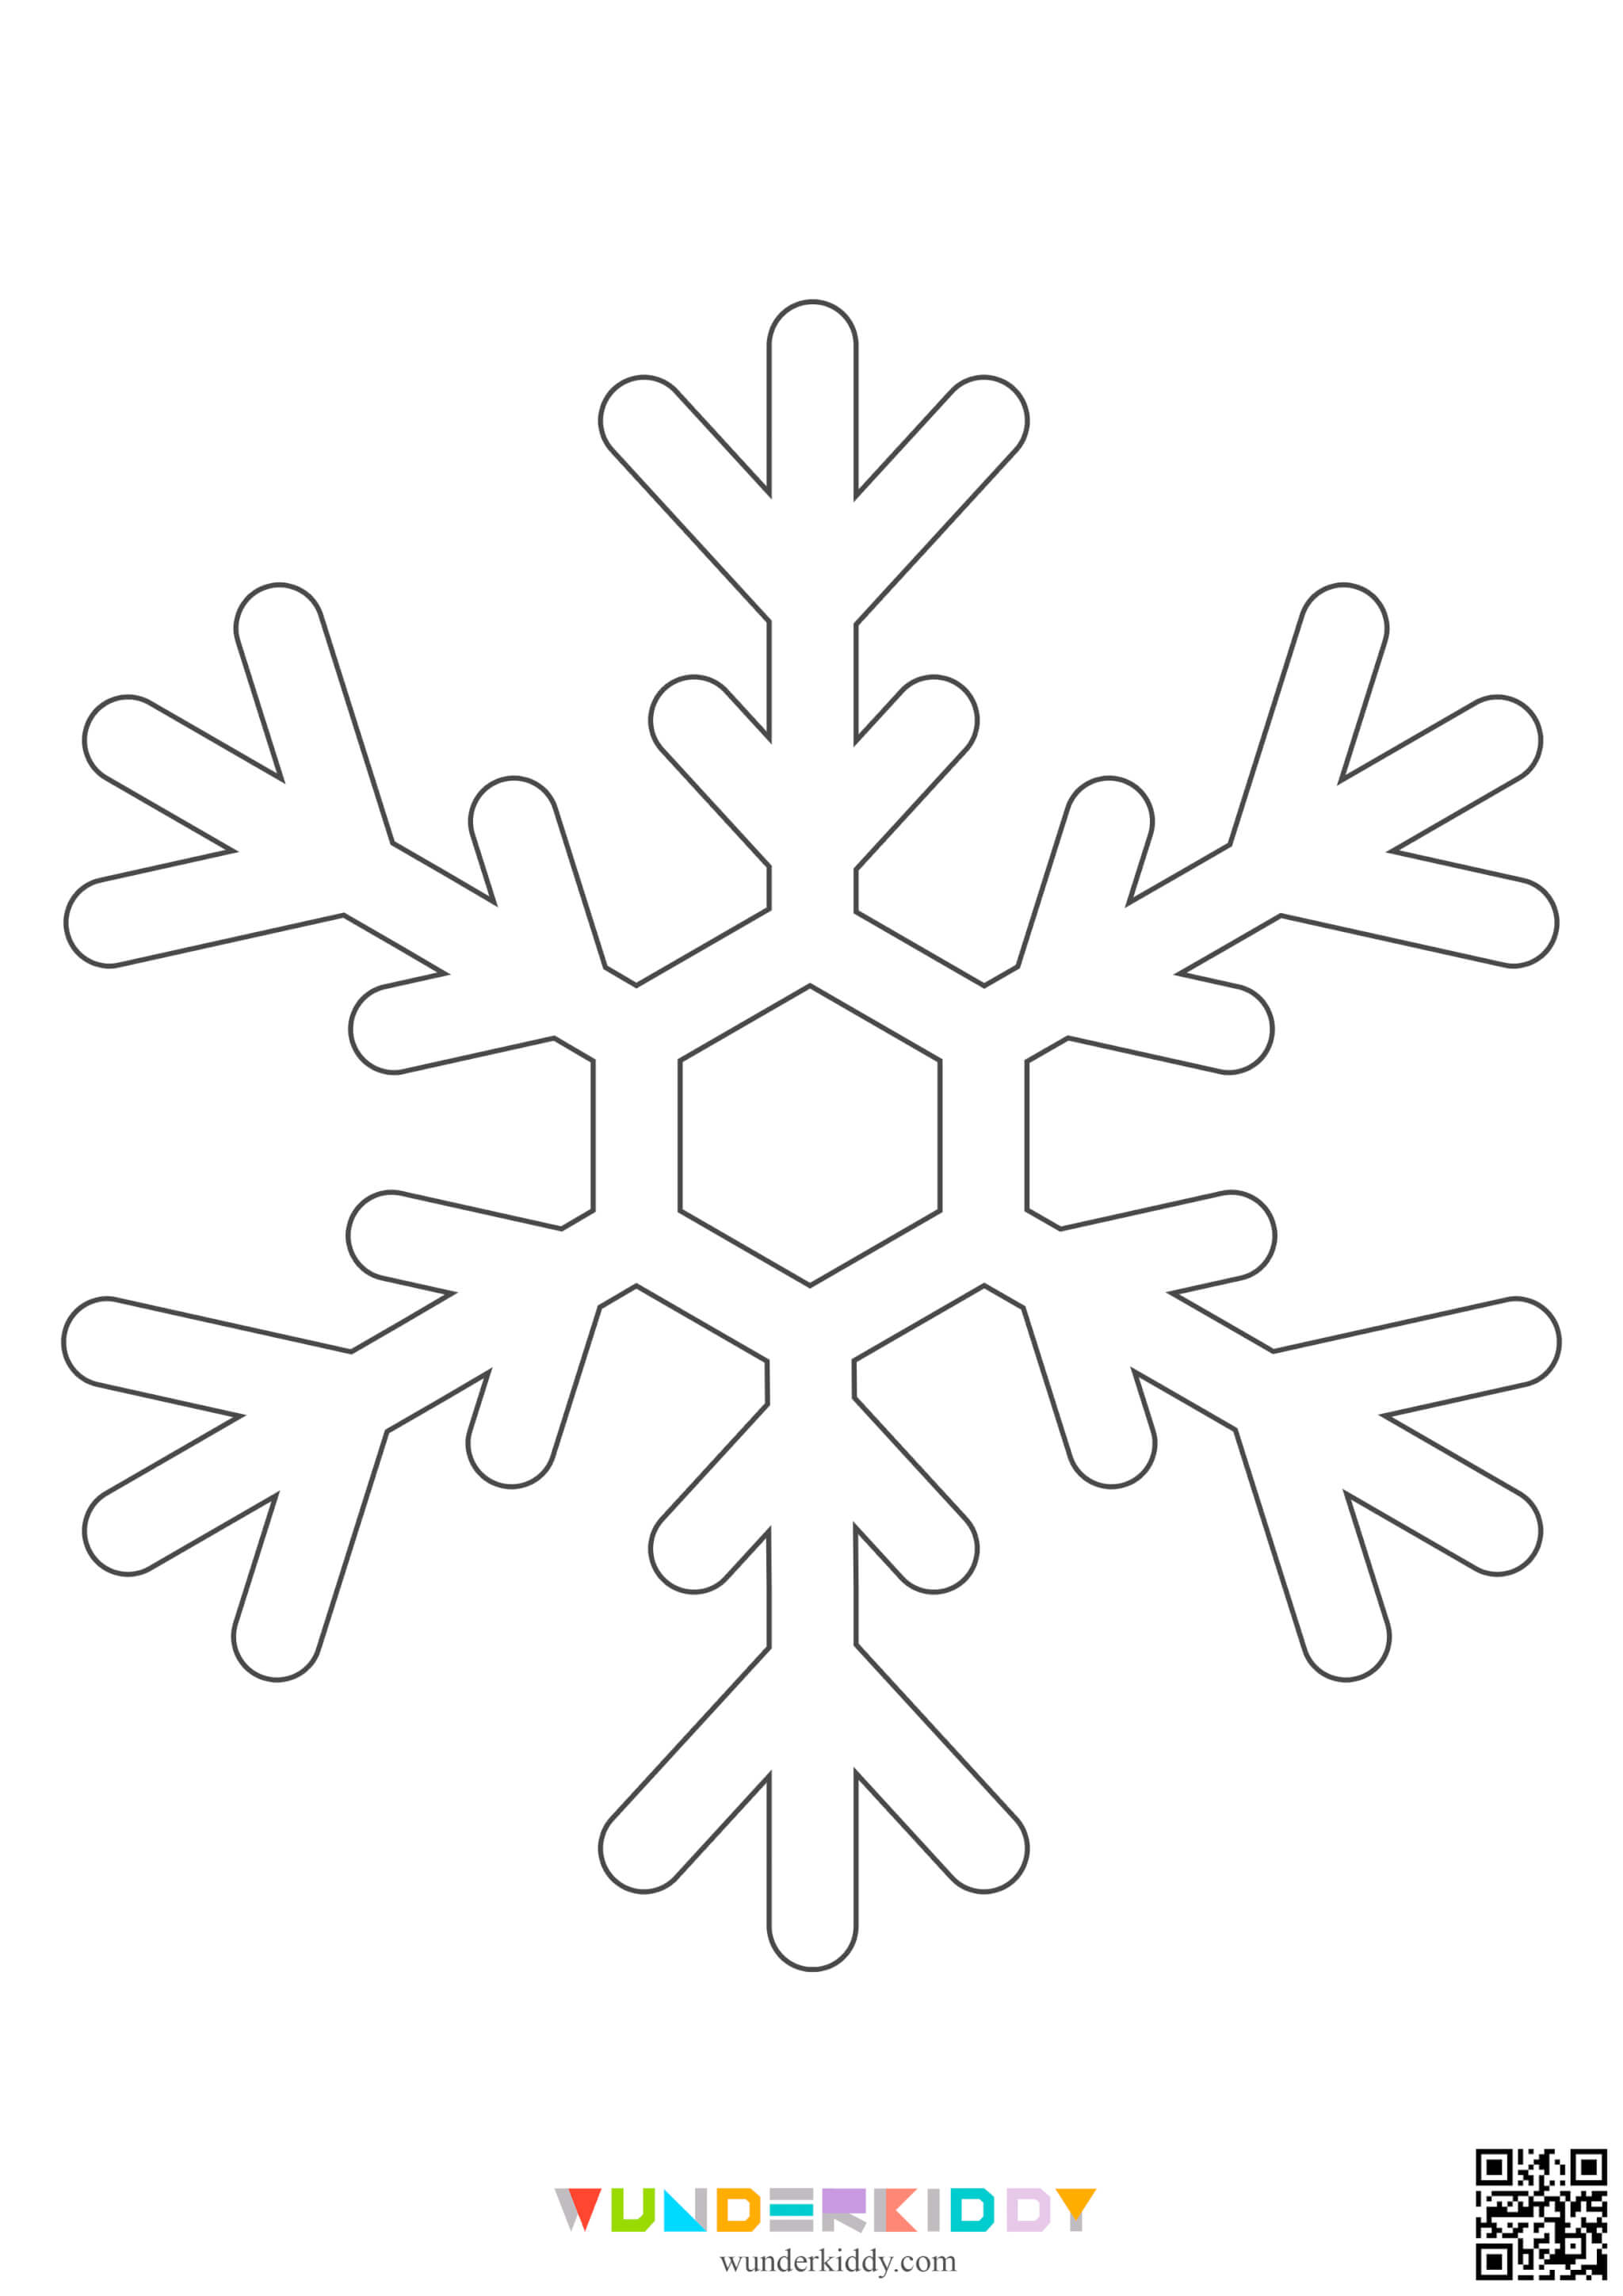 Snowflake Stencil Patterns - Image 12